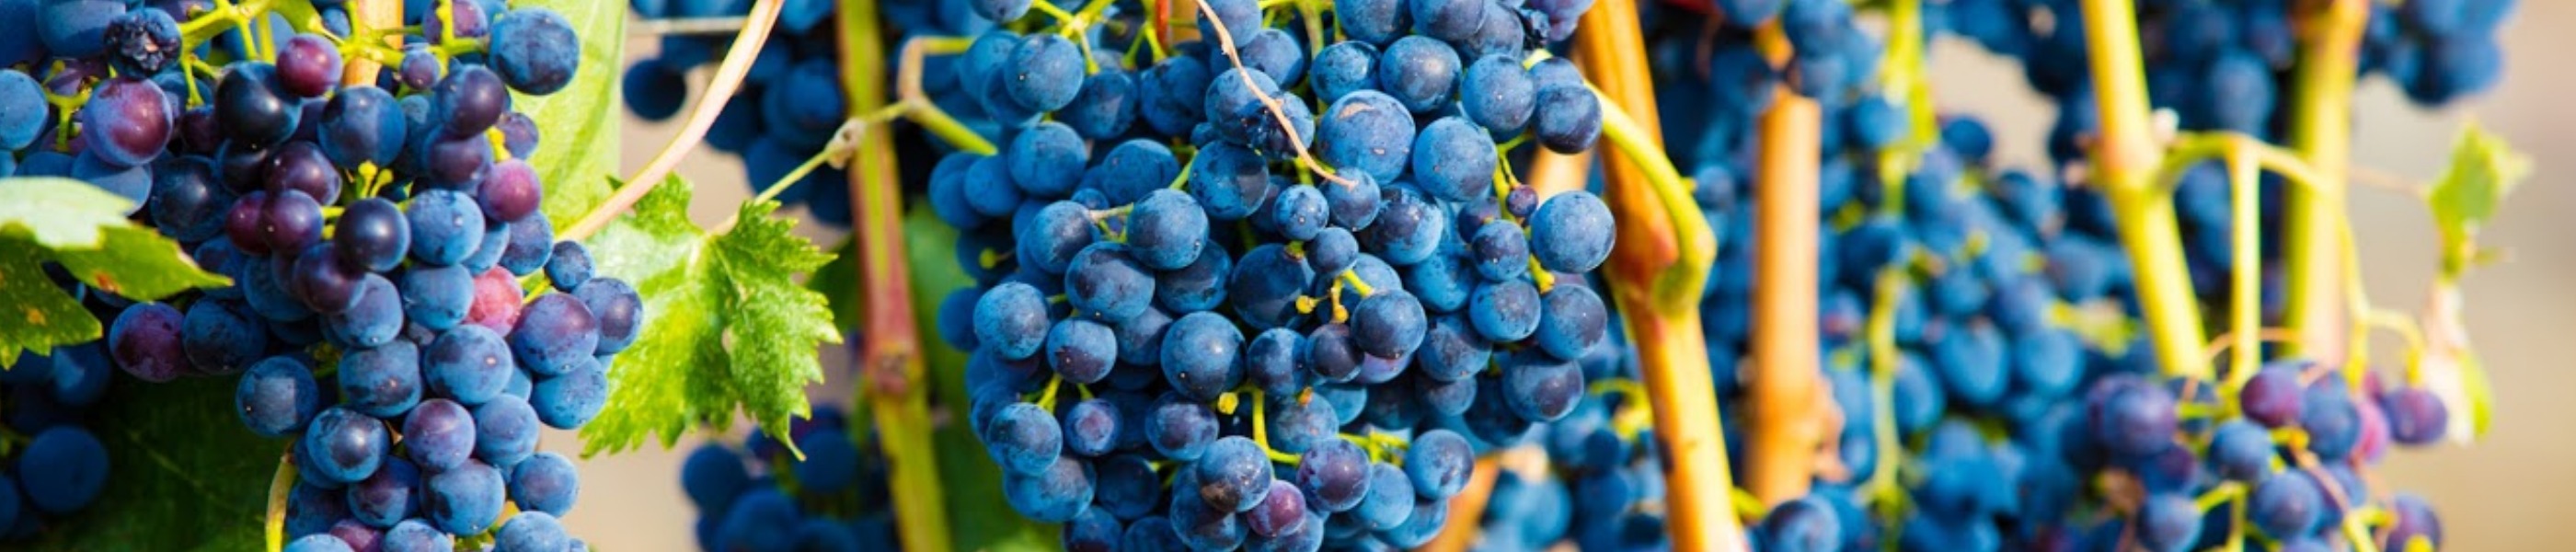 Southern Oregon Wines, grapes, season, harvest